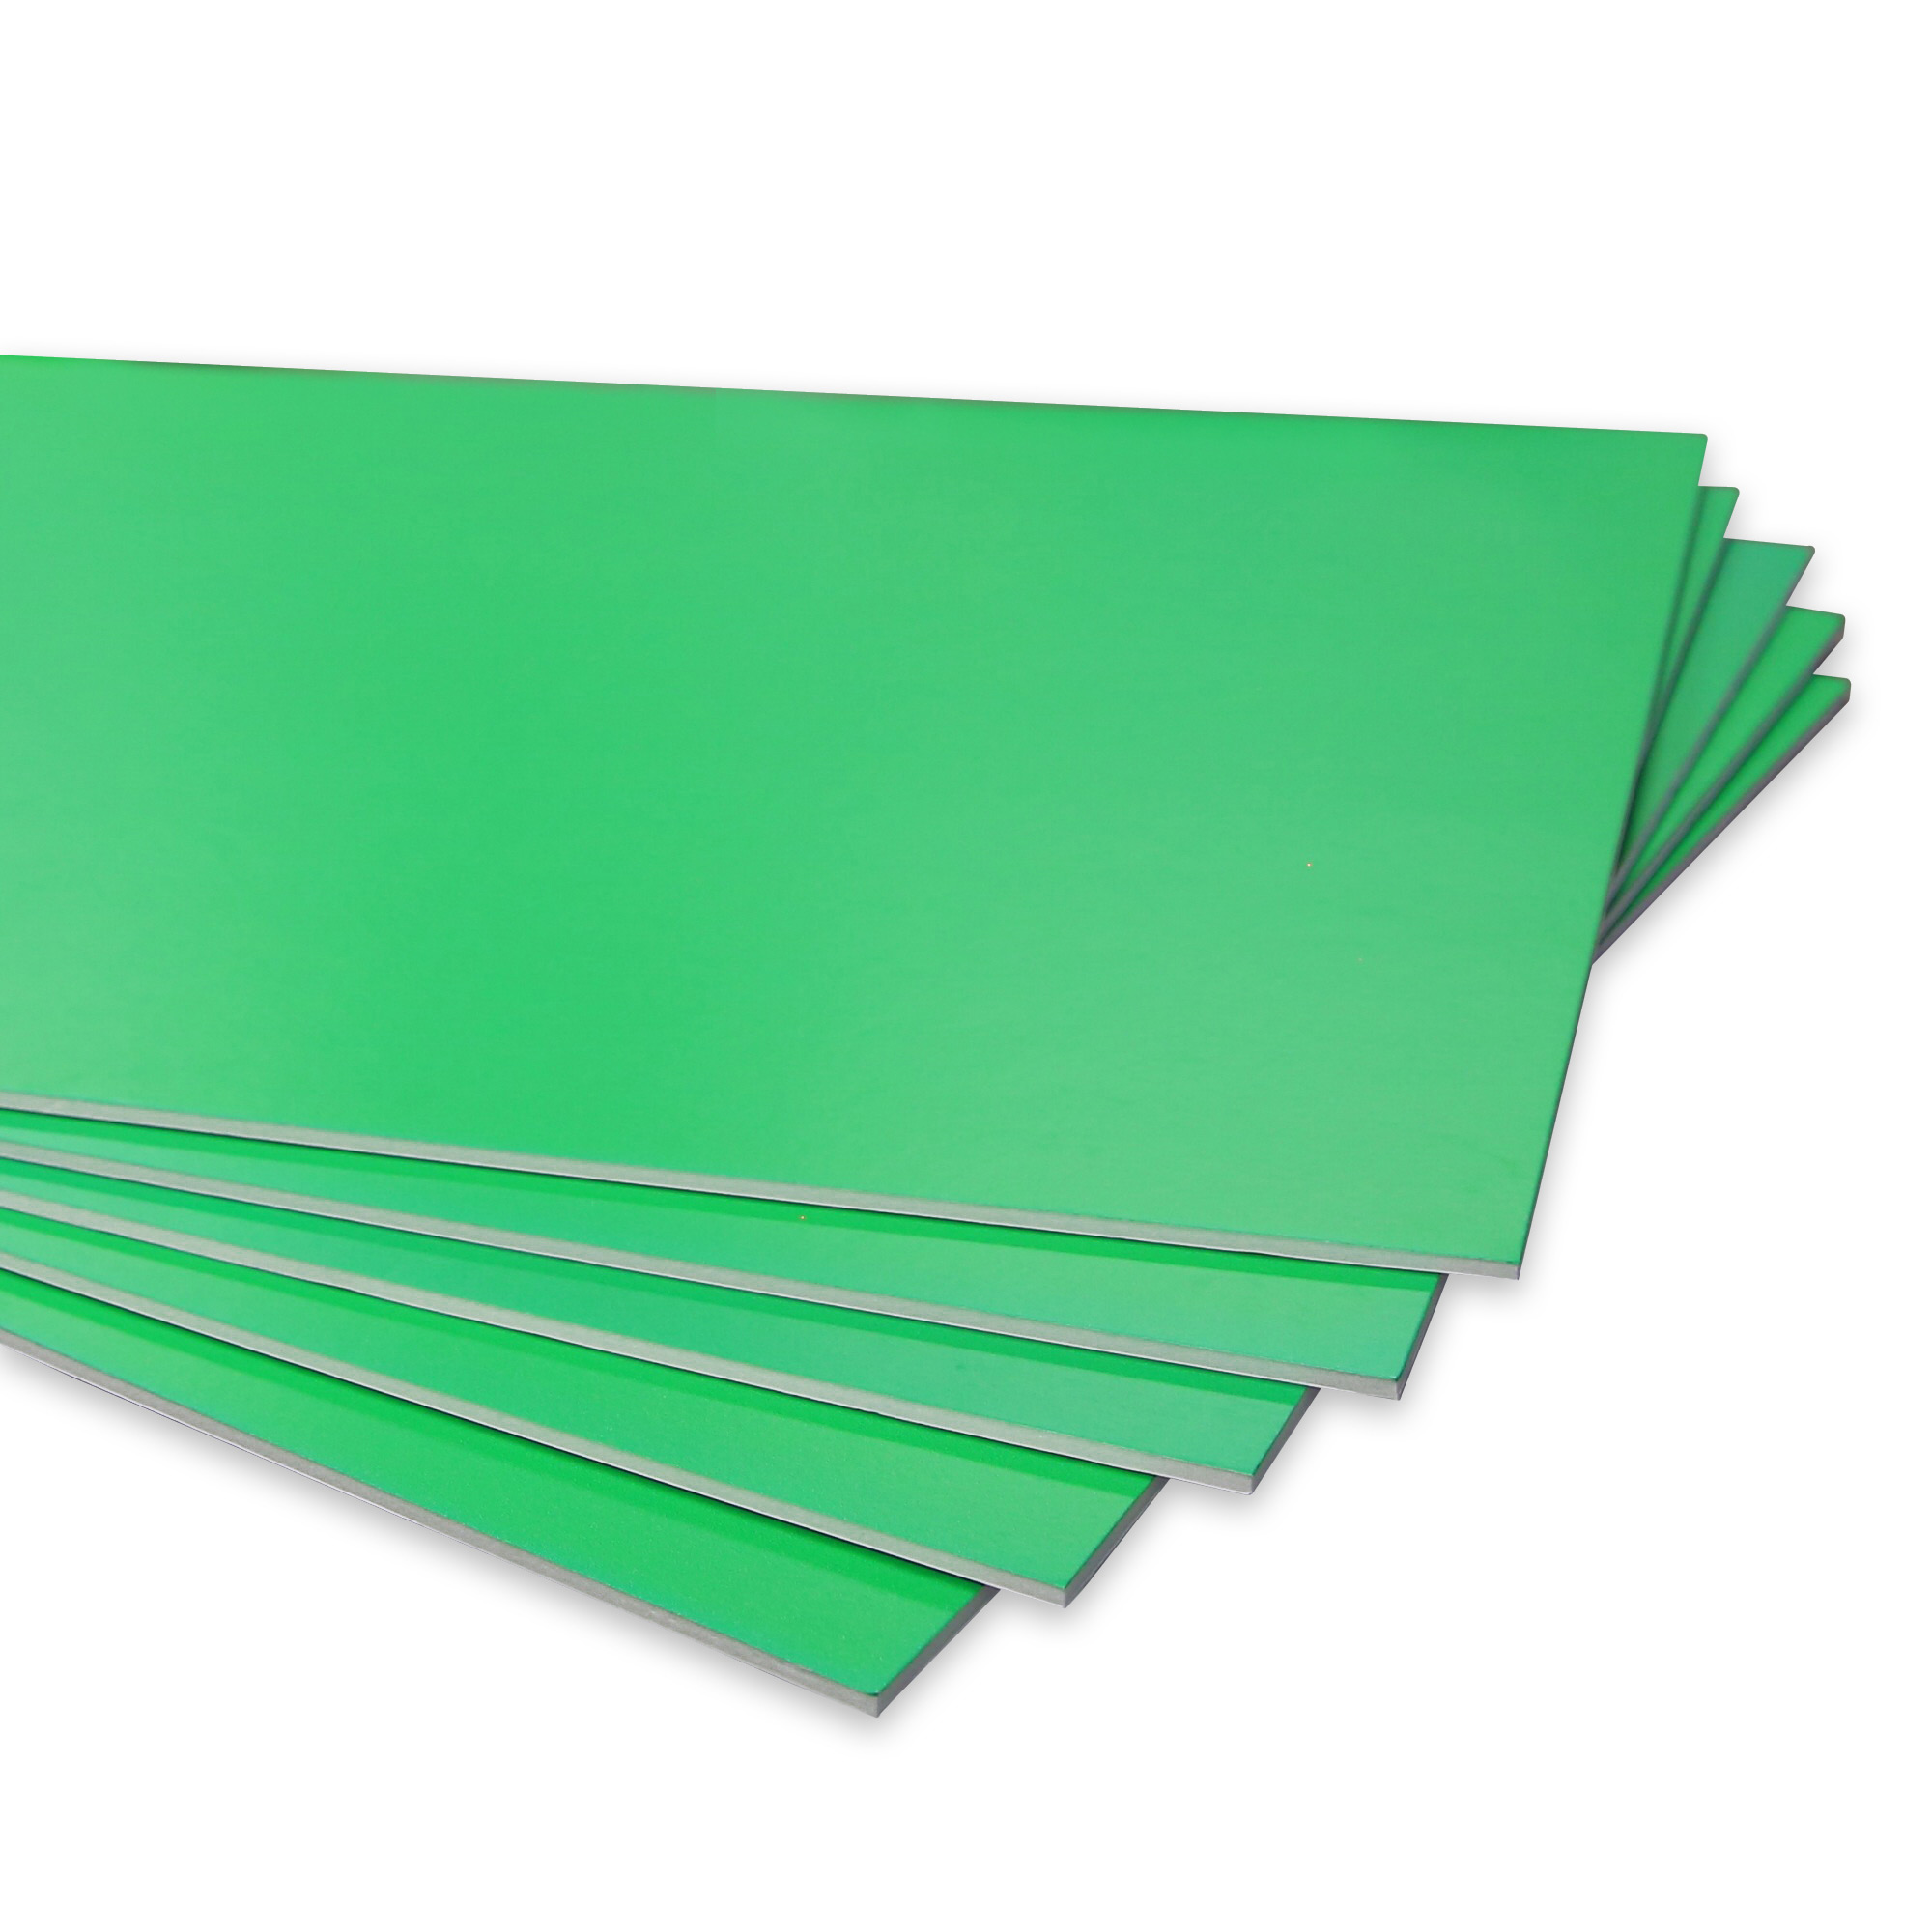  UCreate Foam Board, 6 Assorted Colors, No UPCs, 20 x 30, 10  Boards : Foam Core Board : Office Products